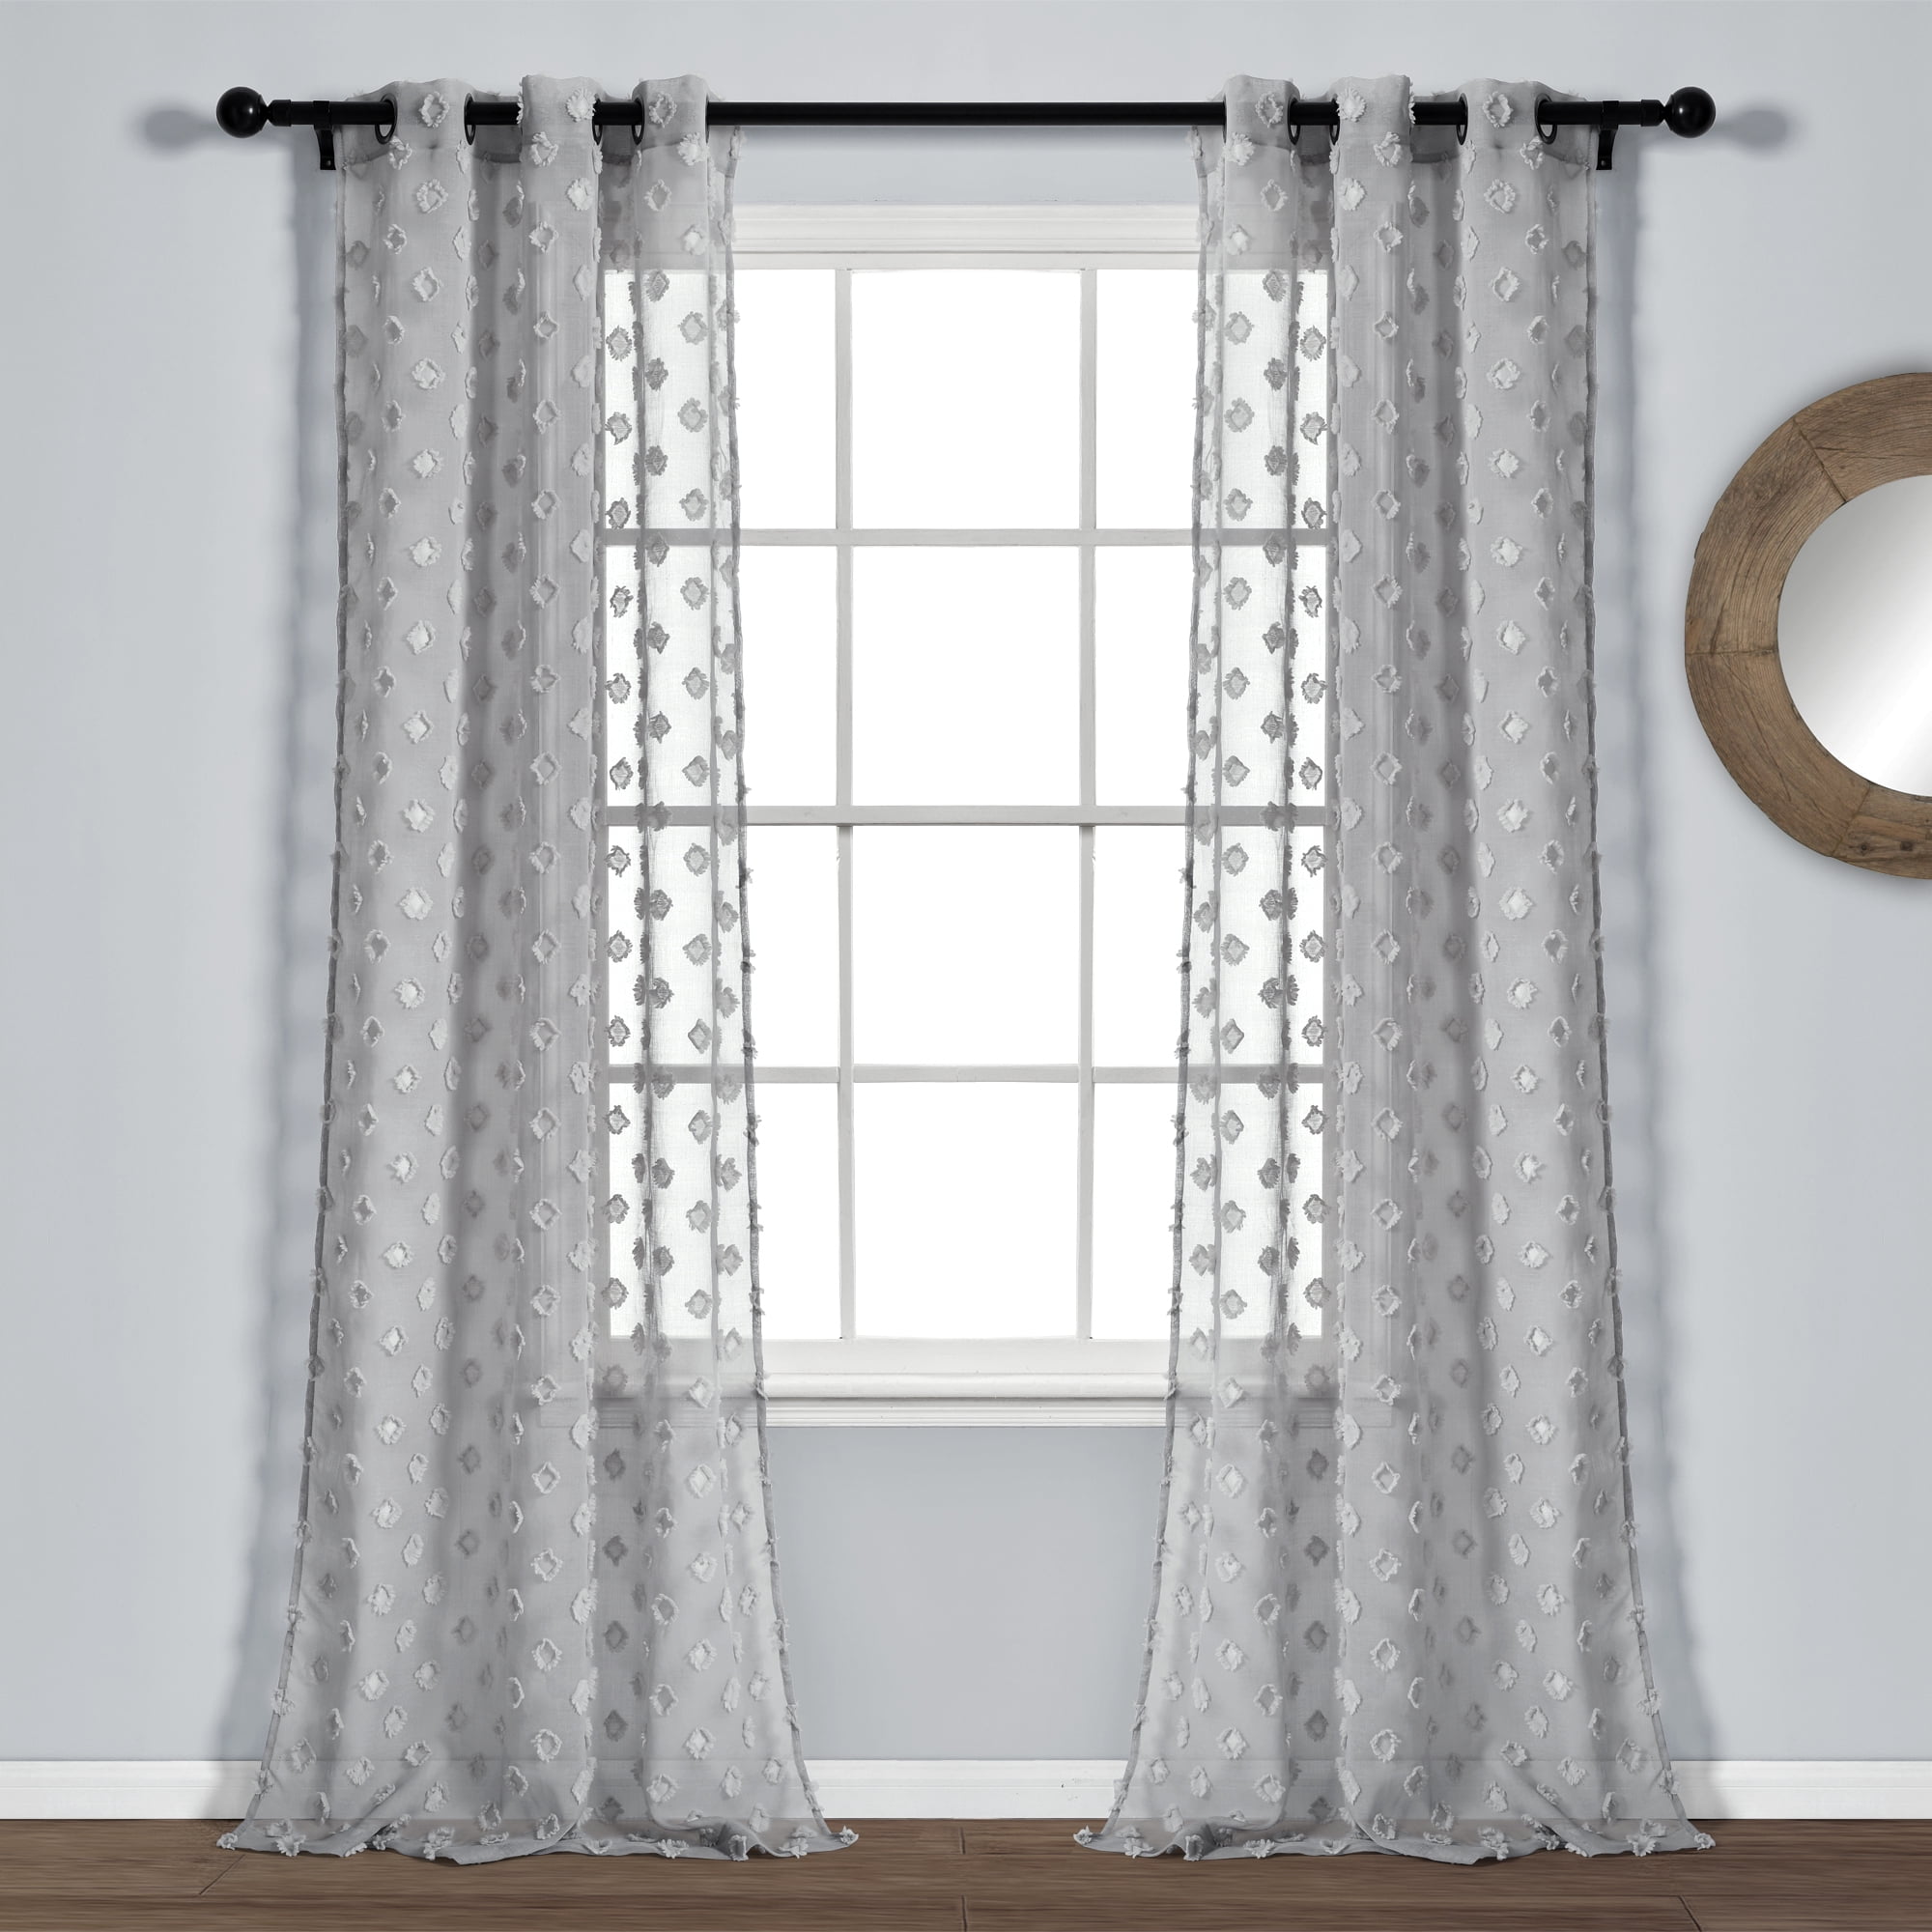 Lush Decor Textured Dot Grommet Sheer Window Curtain